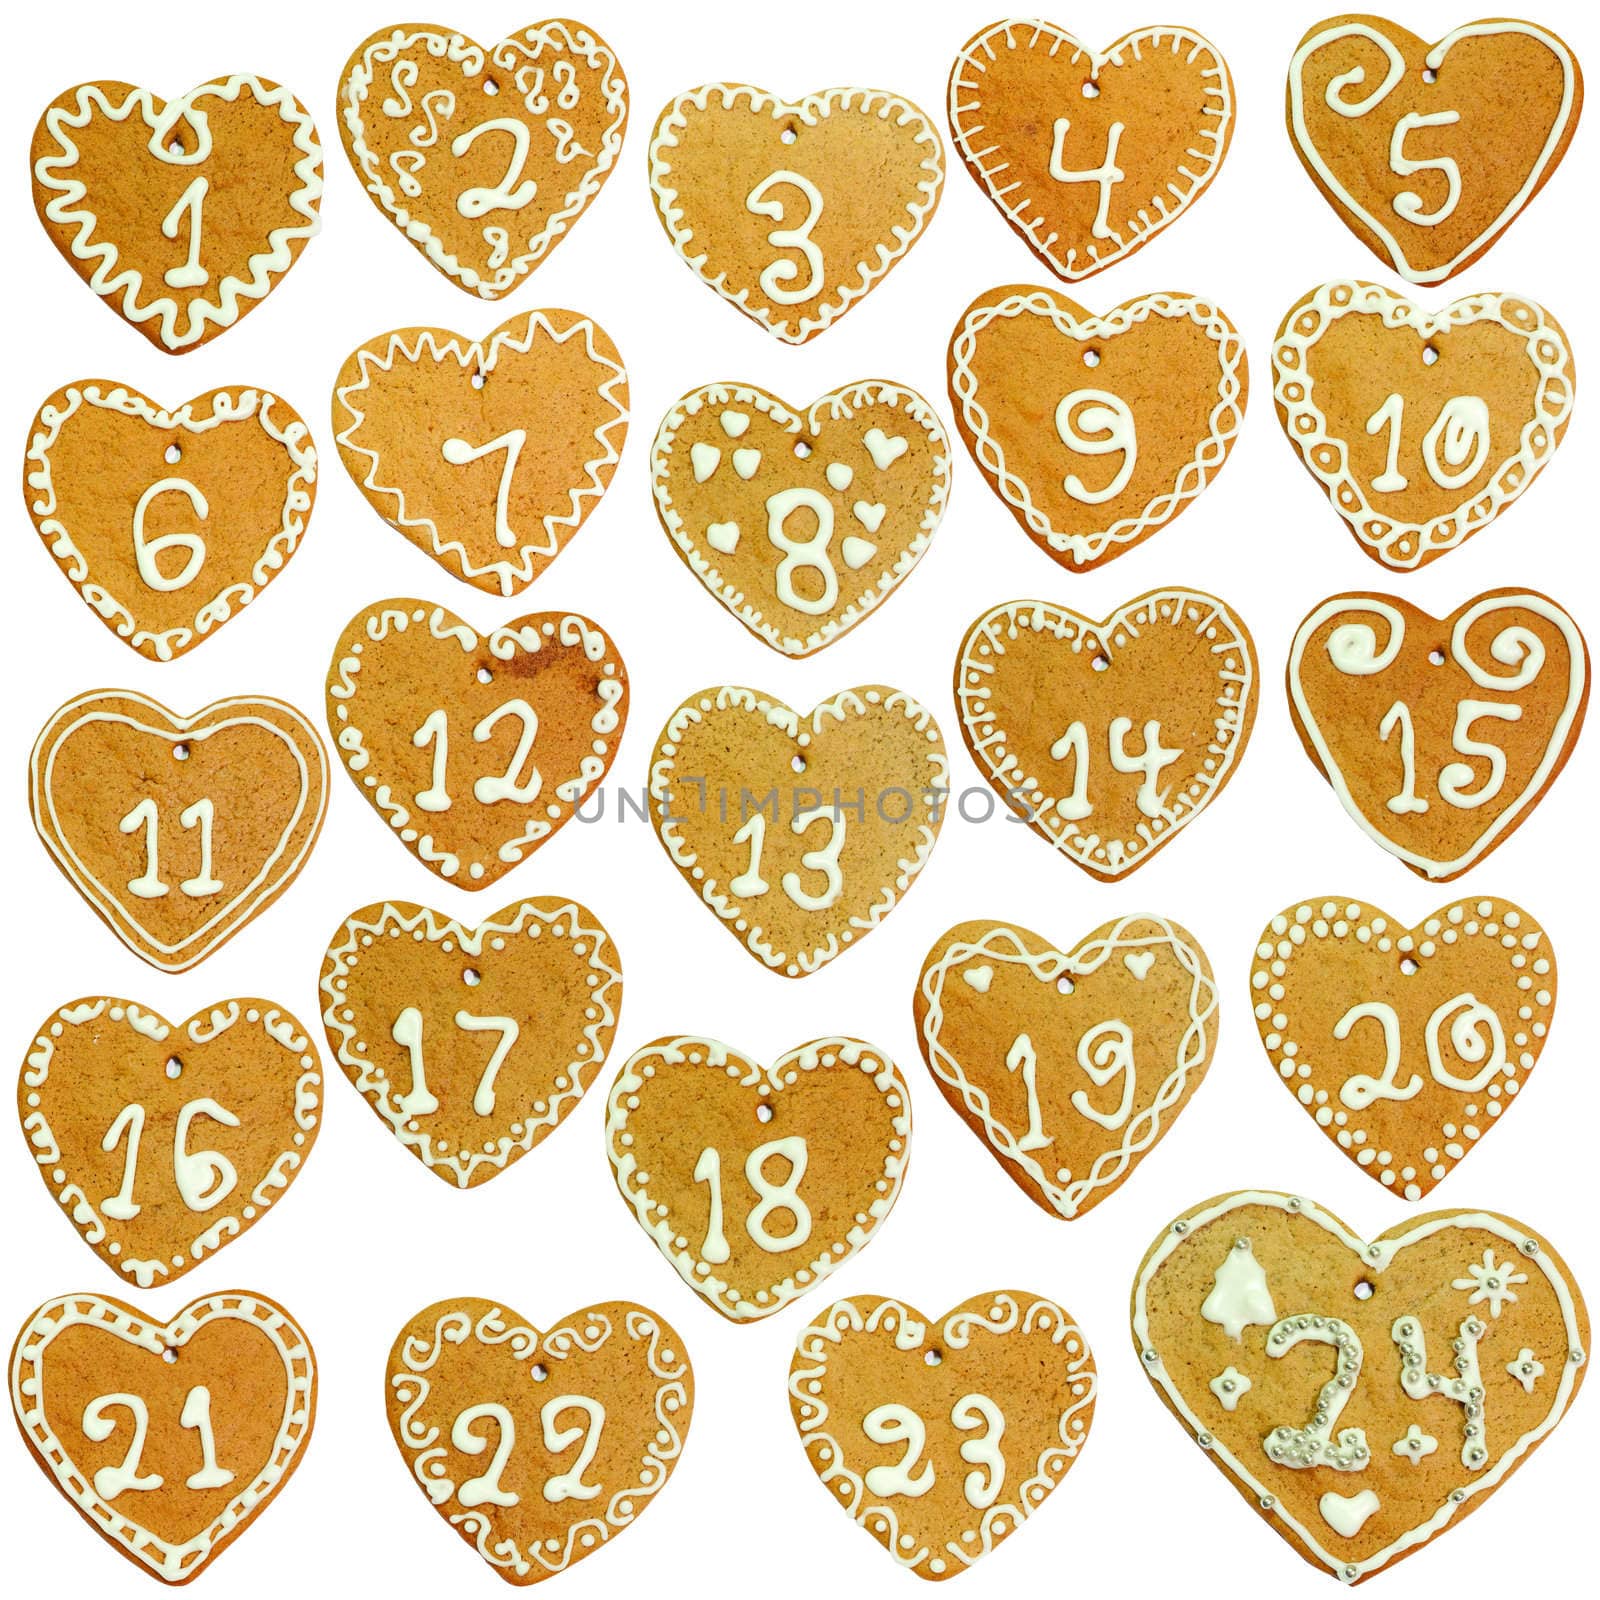 Gingerbread calendar; 24 decorated hearts